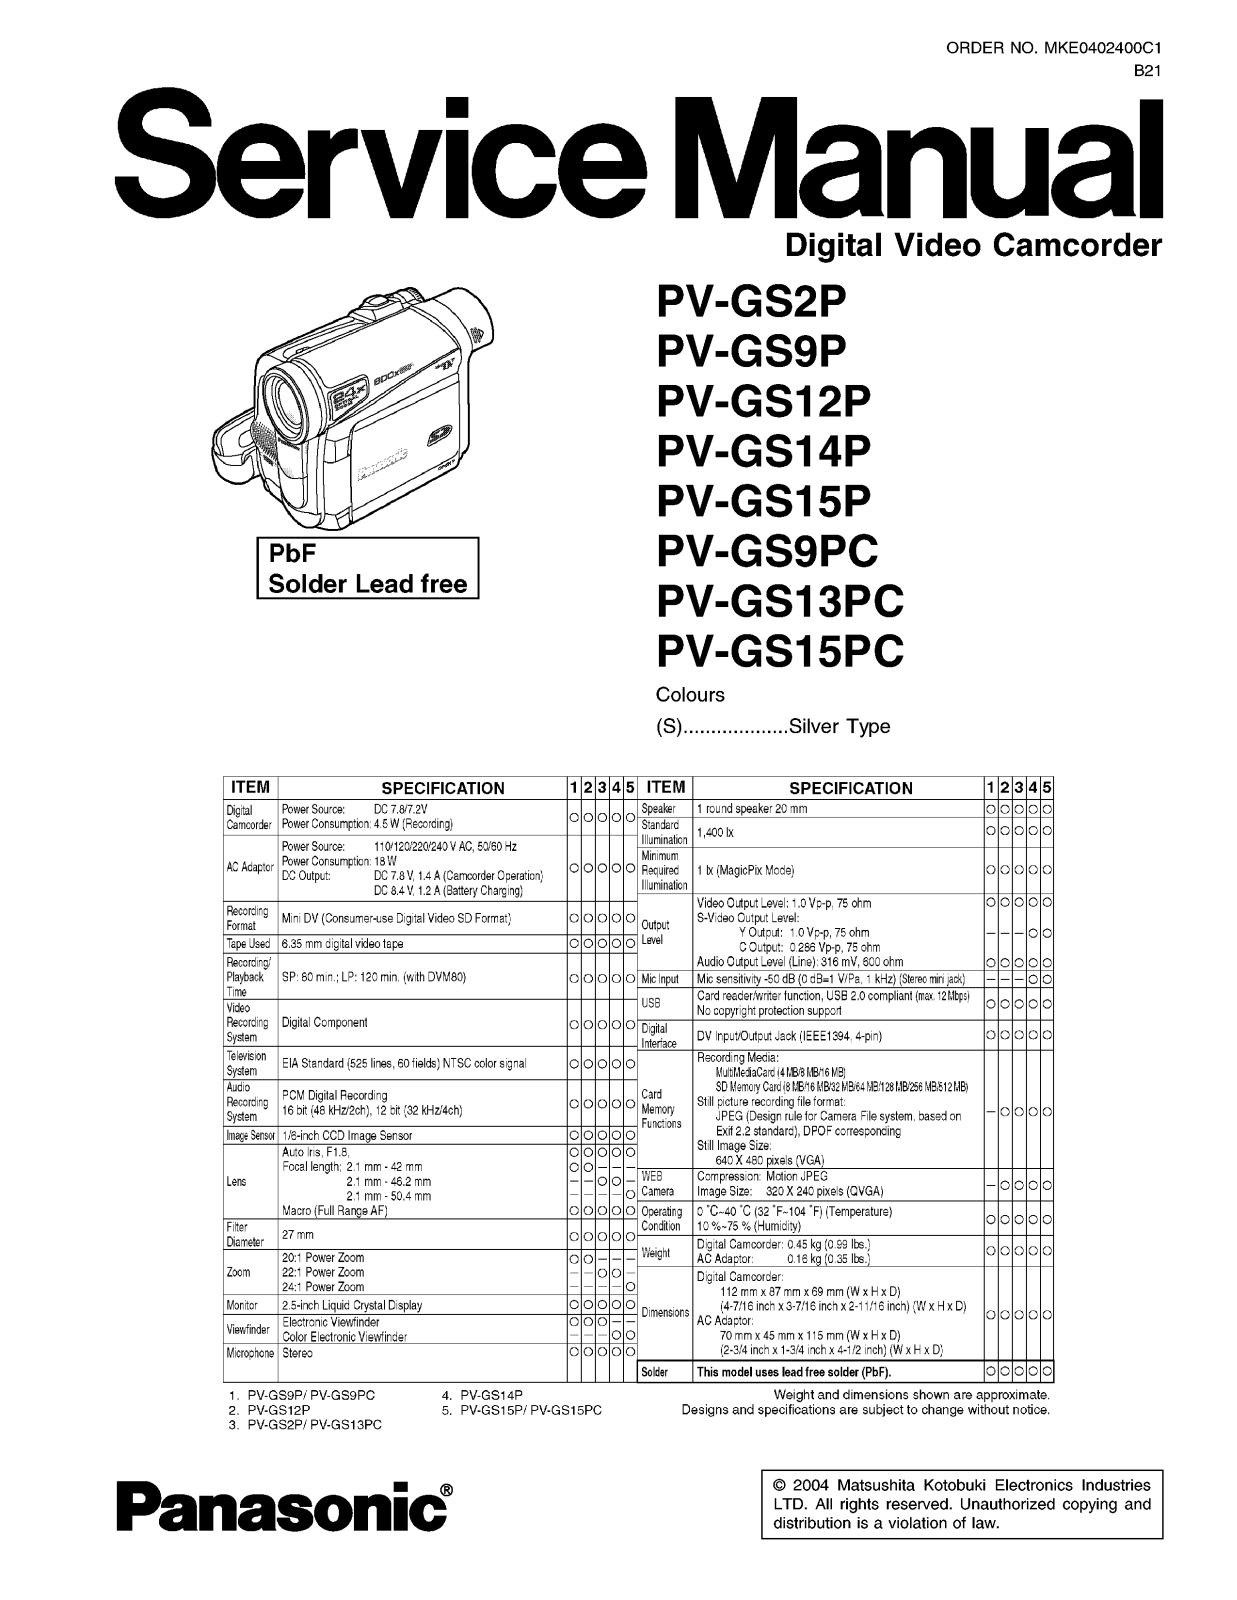 Panasonic PV-GS2P, PV-GS9P, PV-GS12P, PV-GS14P, PV-GS15P Service Manual